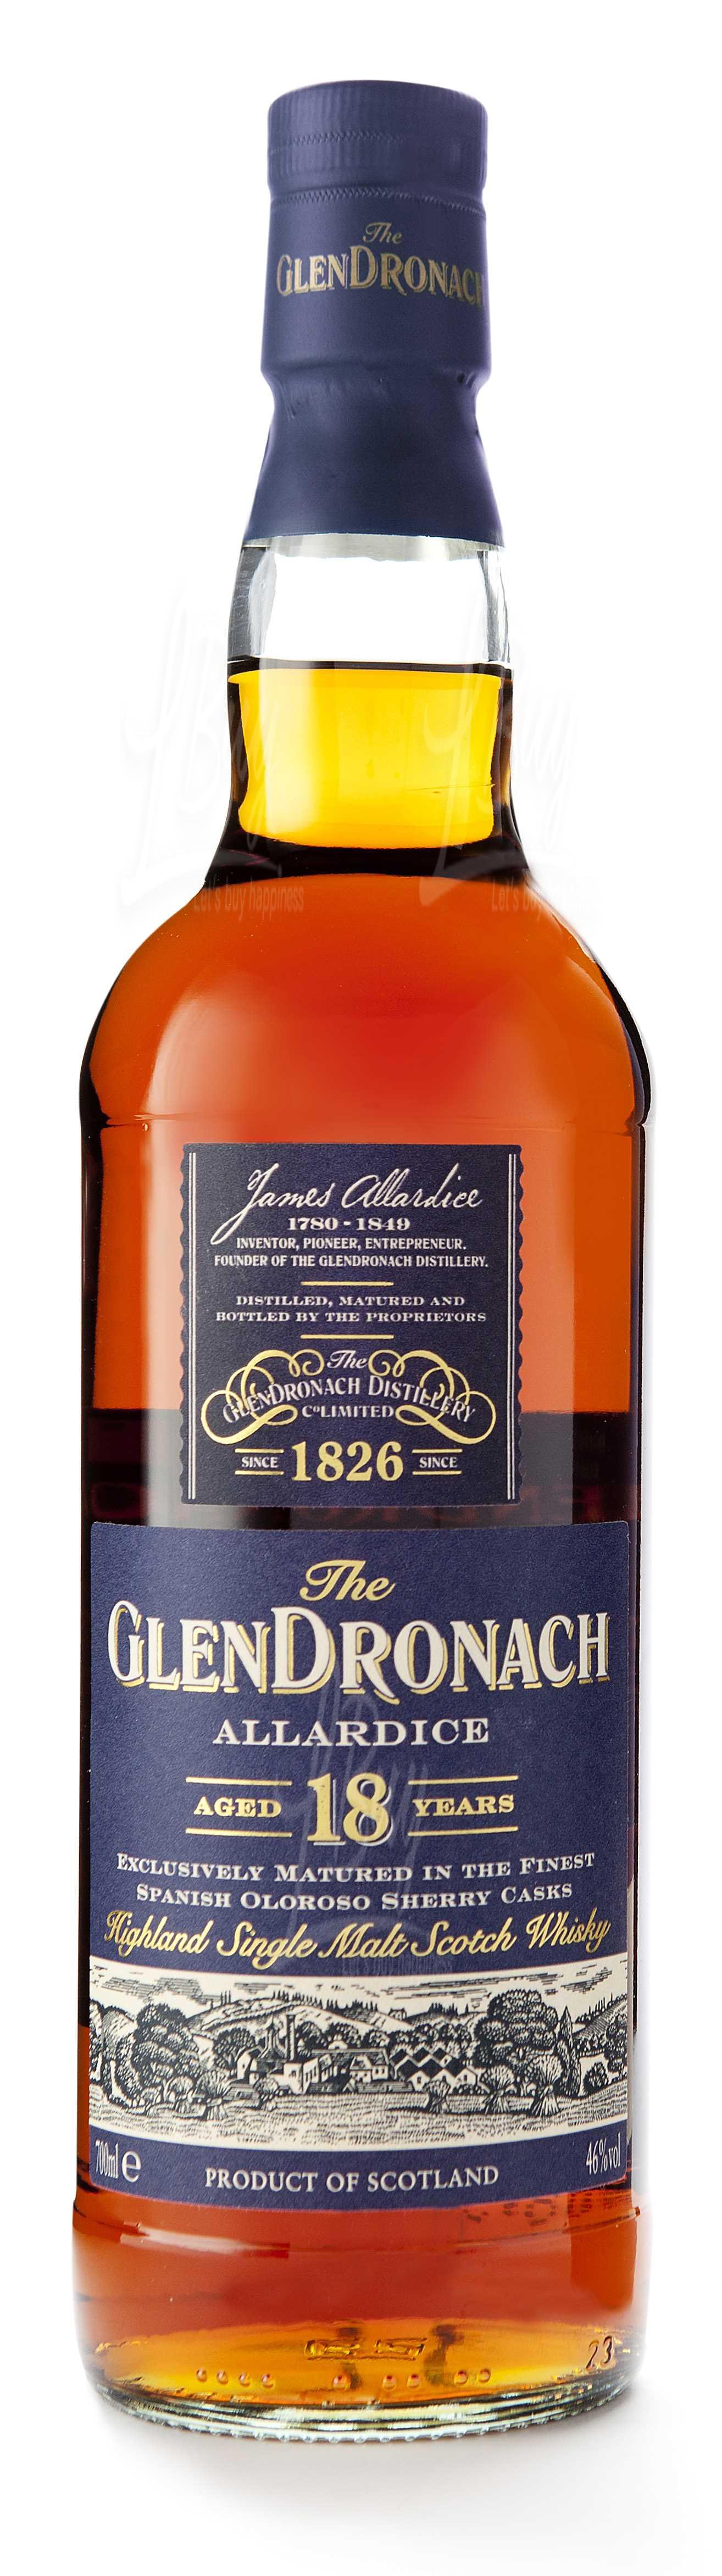 The GlenDronach Allardice Aged 18 Years